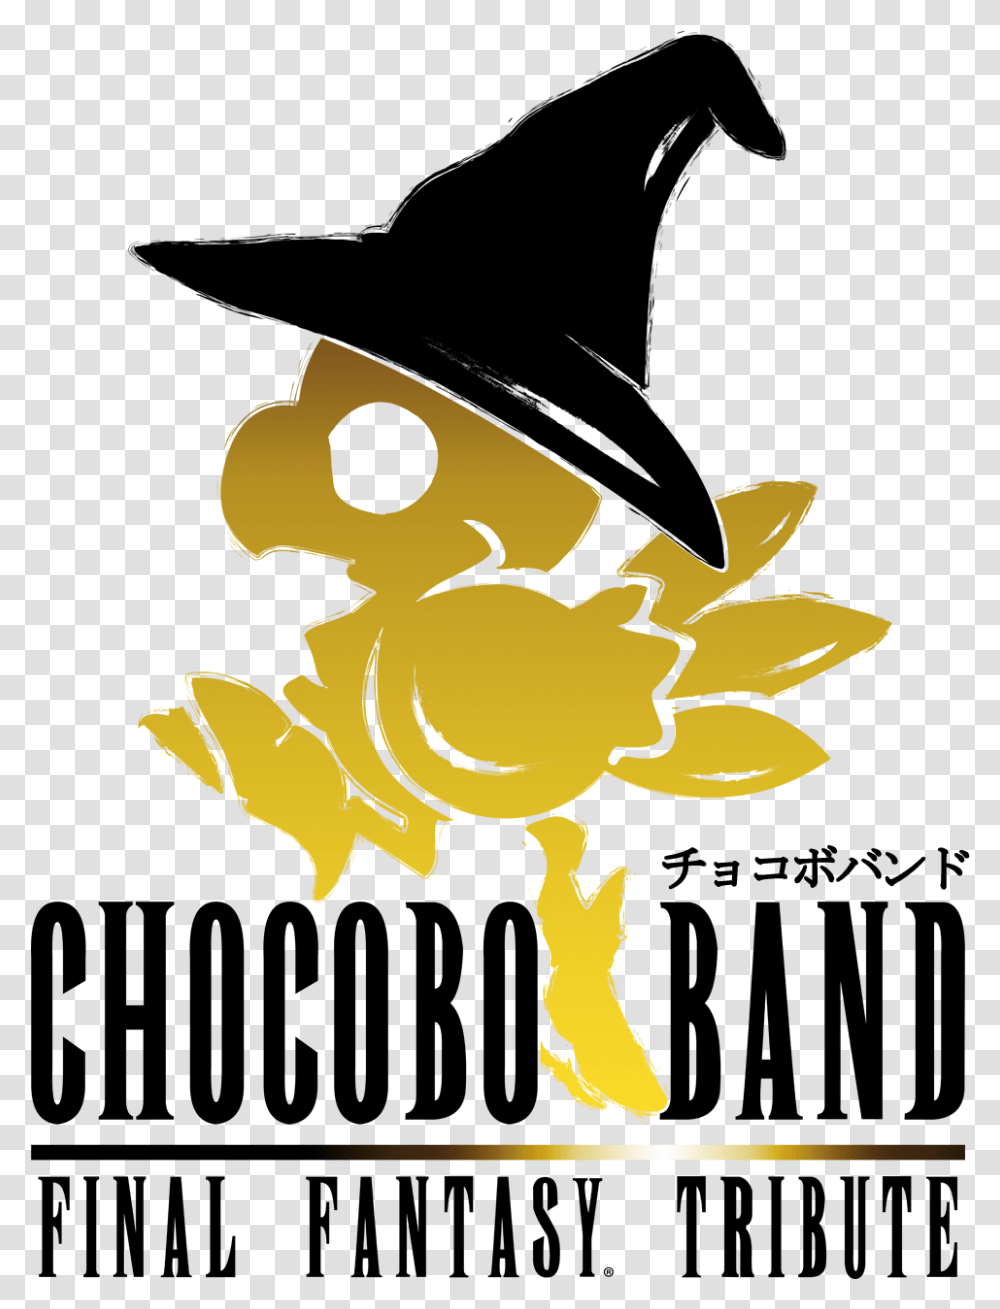 Chocobo Band Store Chocobo Band, Bird, Animal, Gold Transparent Png